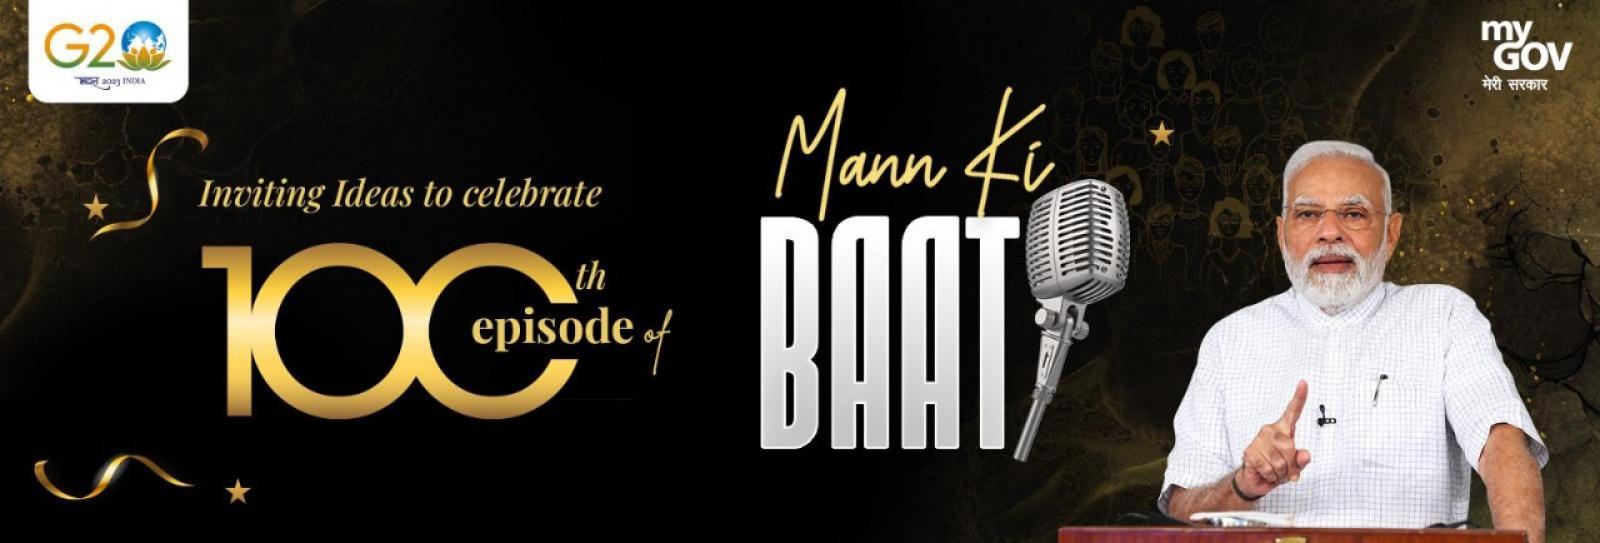 Maan ki baat-Inviting ideas to celebrate 100 episode